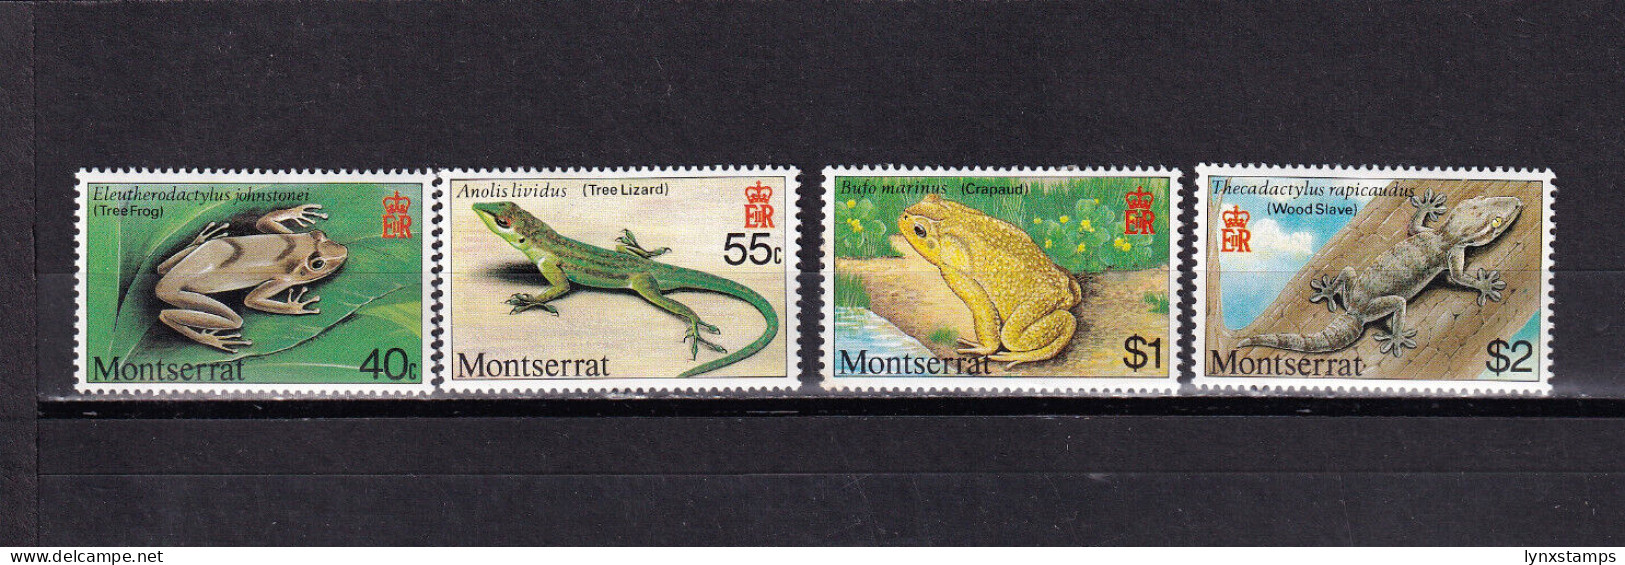 LI07 Montserrat 1980 Reptiles And Amphibians Mint Hinged Stamps Full Set - Montserrat